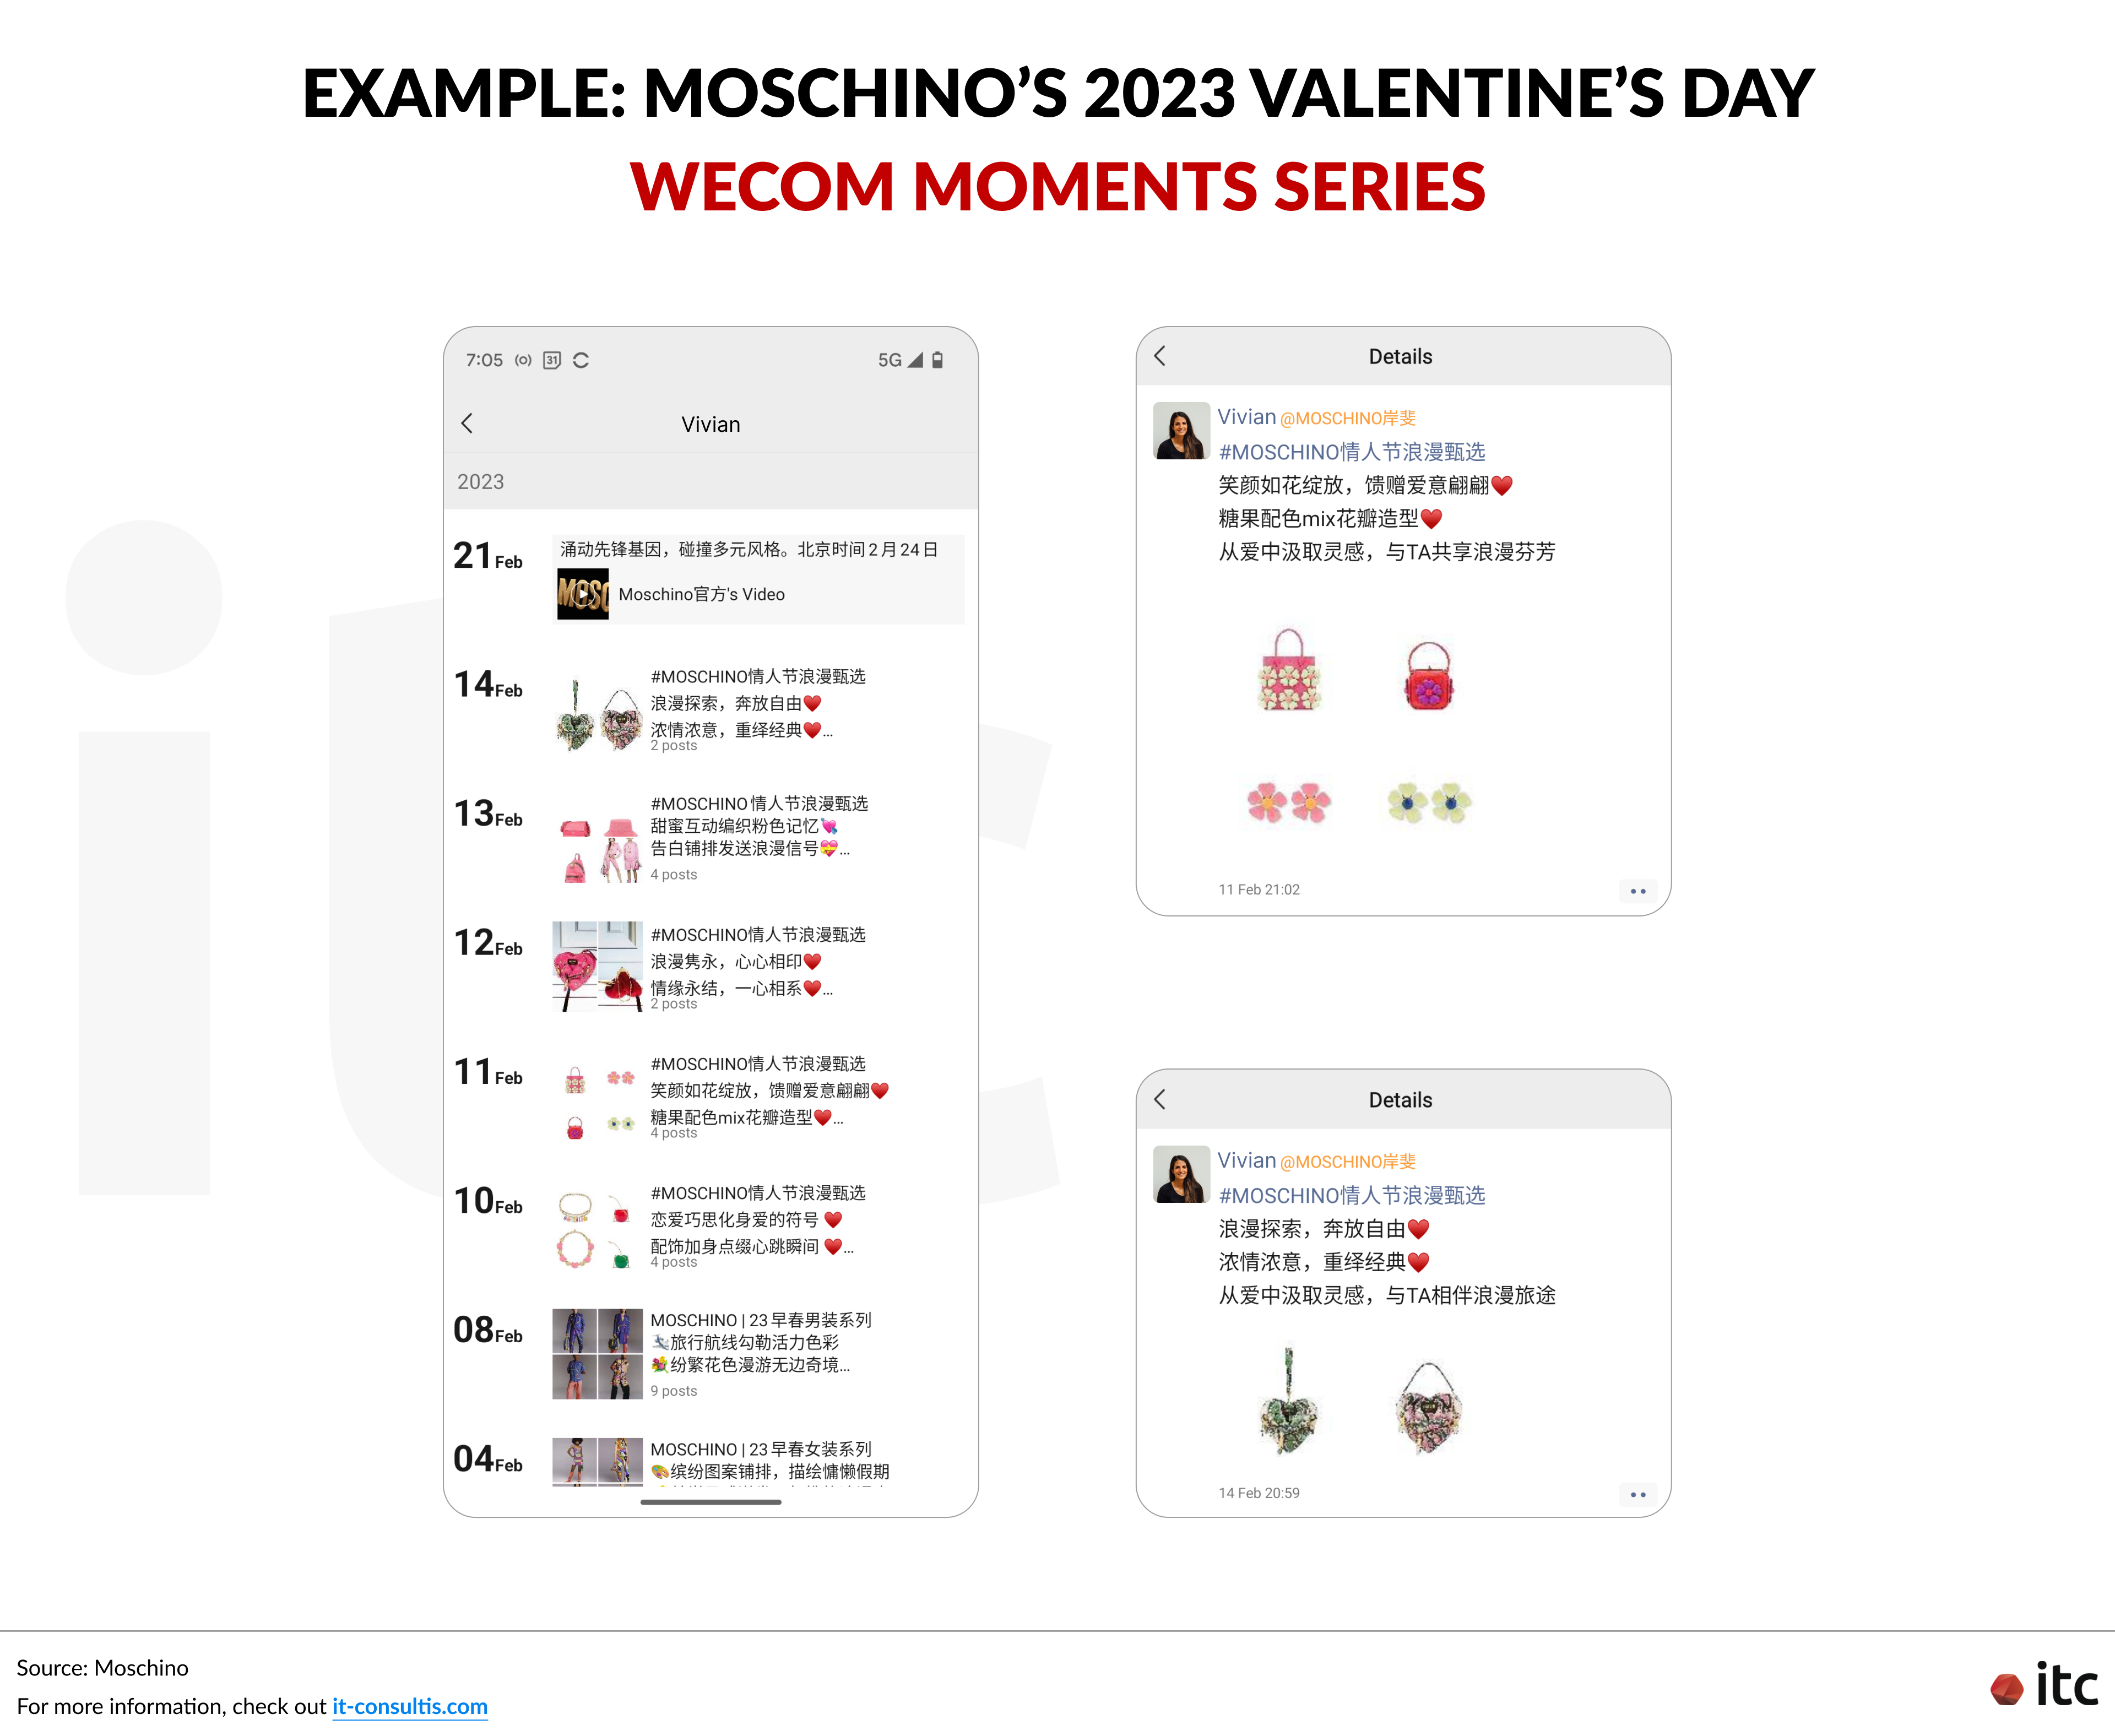 Moschino's 2023 Valentine's Day WeCom Moments Series